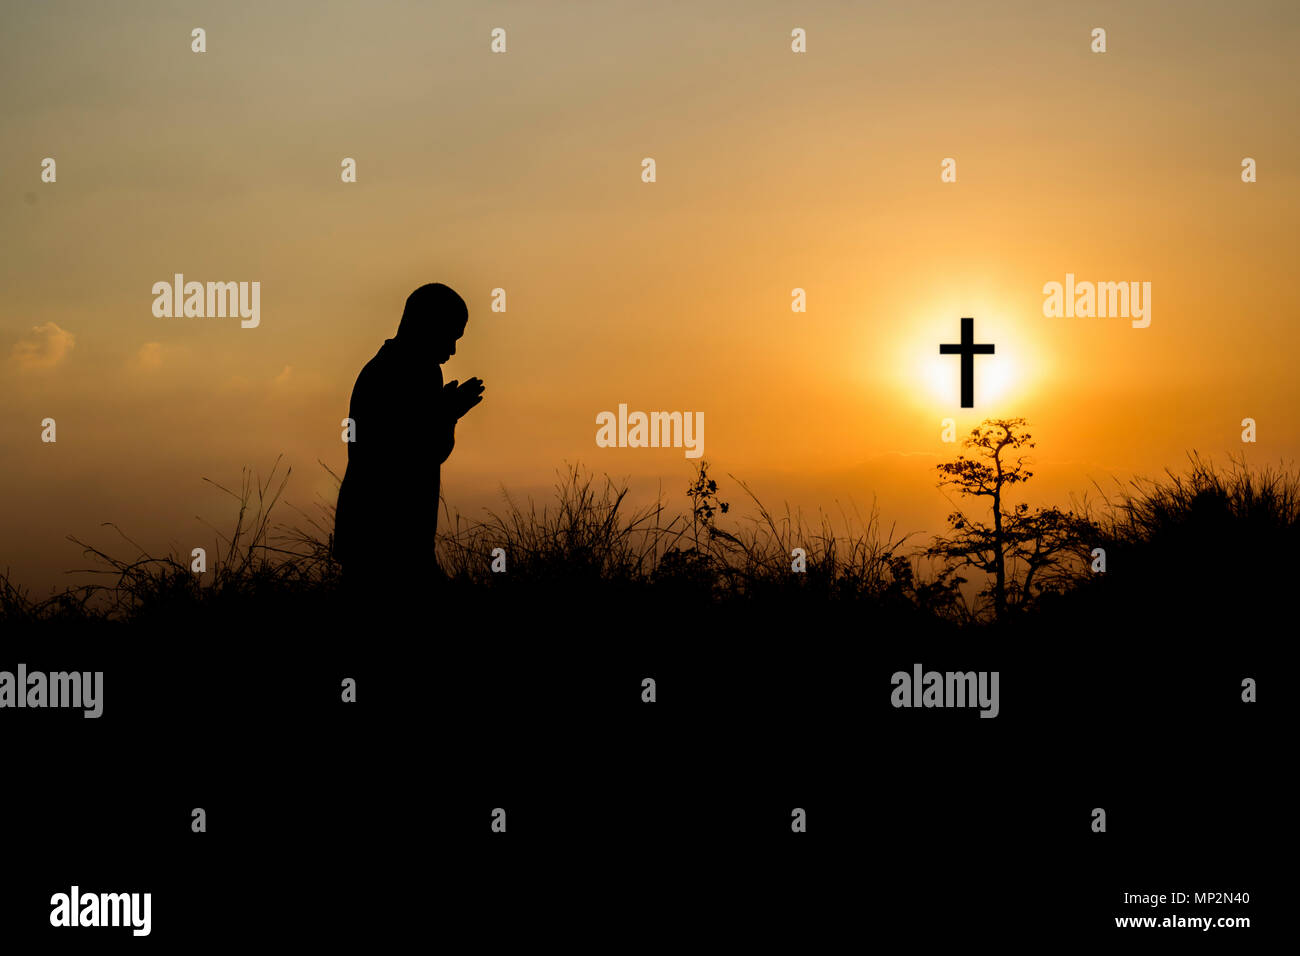 cross, silhouette, man, christian, praying, religion, worship, prayer, god, sunset, faith, hope, jesus, sky, pray, praise, christianity, background, c Stock Photo